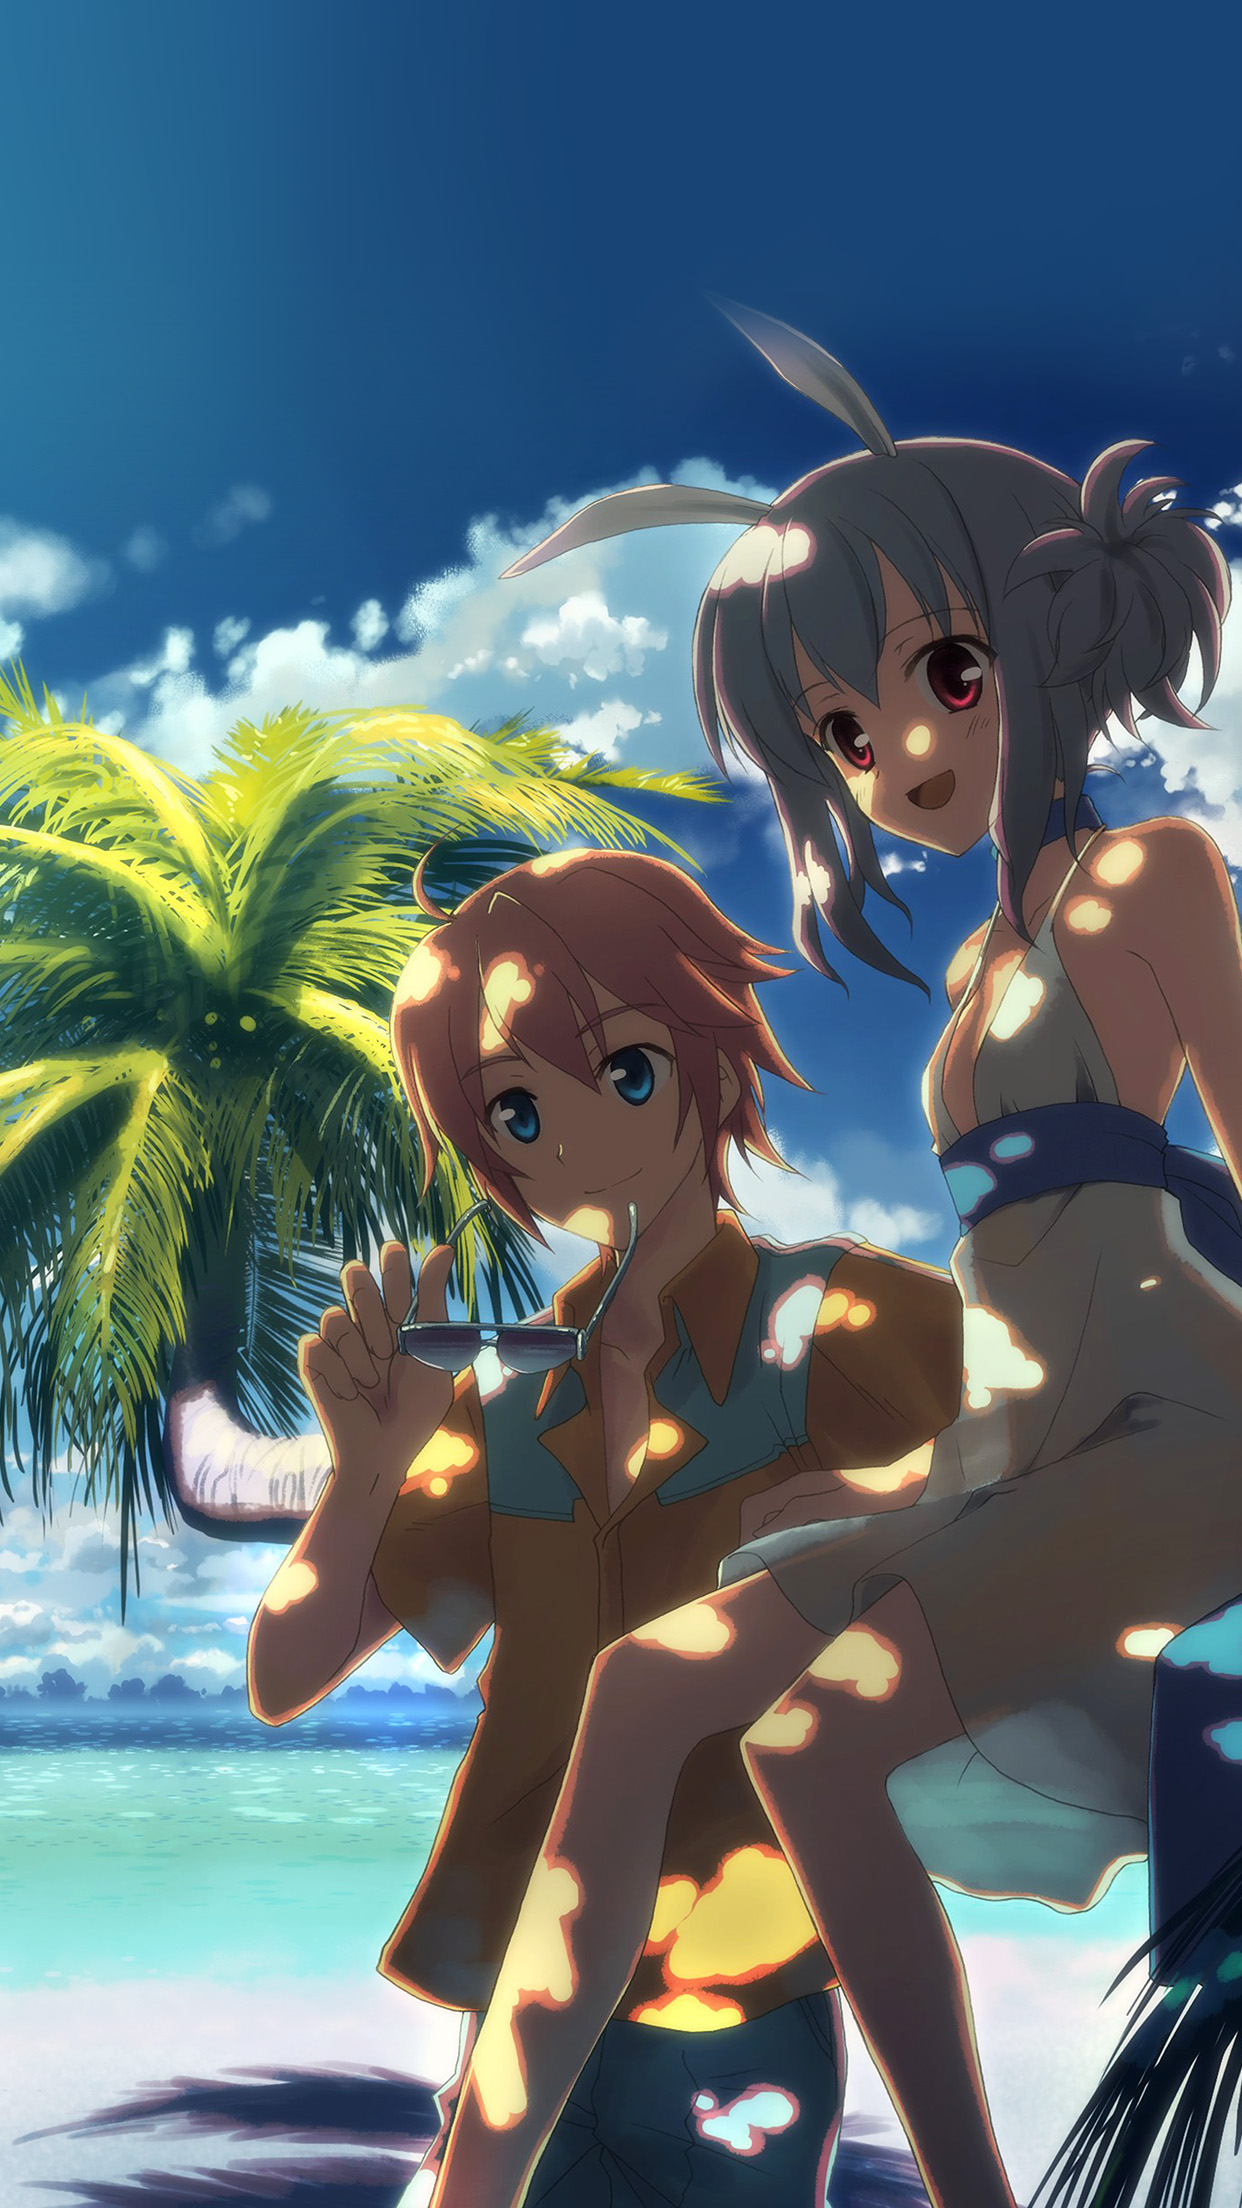 Sea Anime Art Illust Fun Summer Vacation Cute Android wallpaper